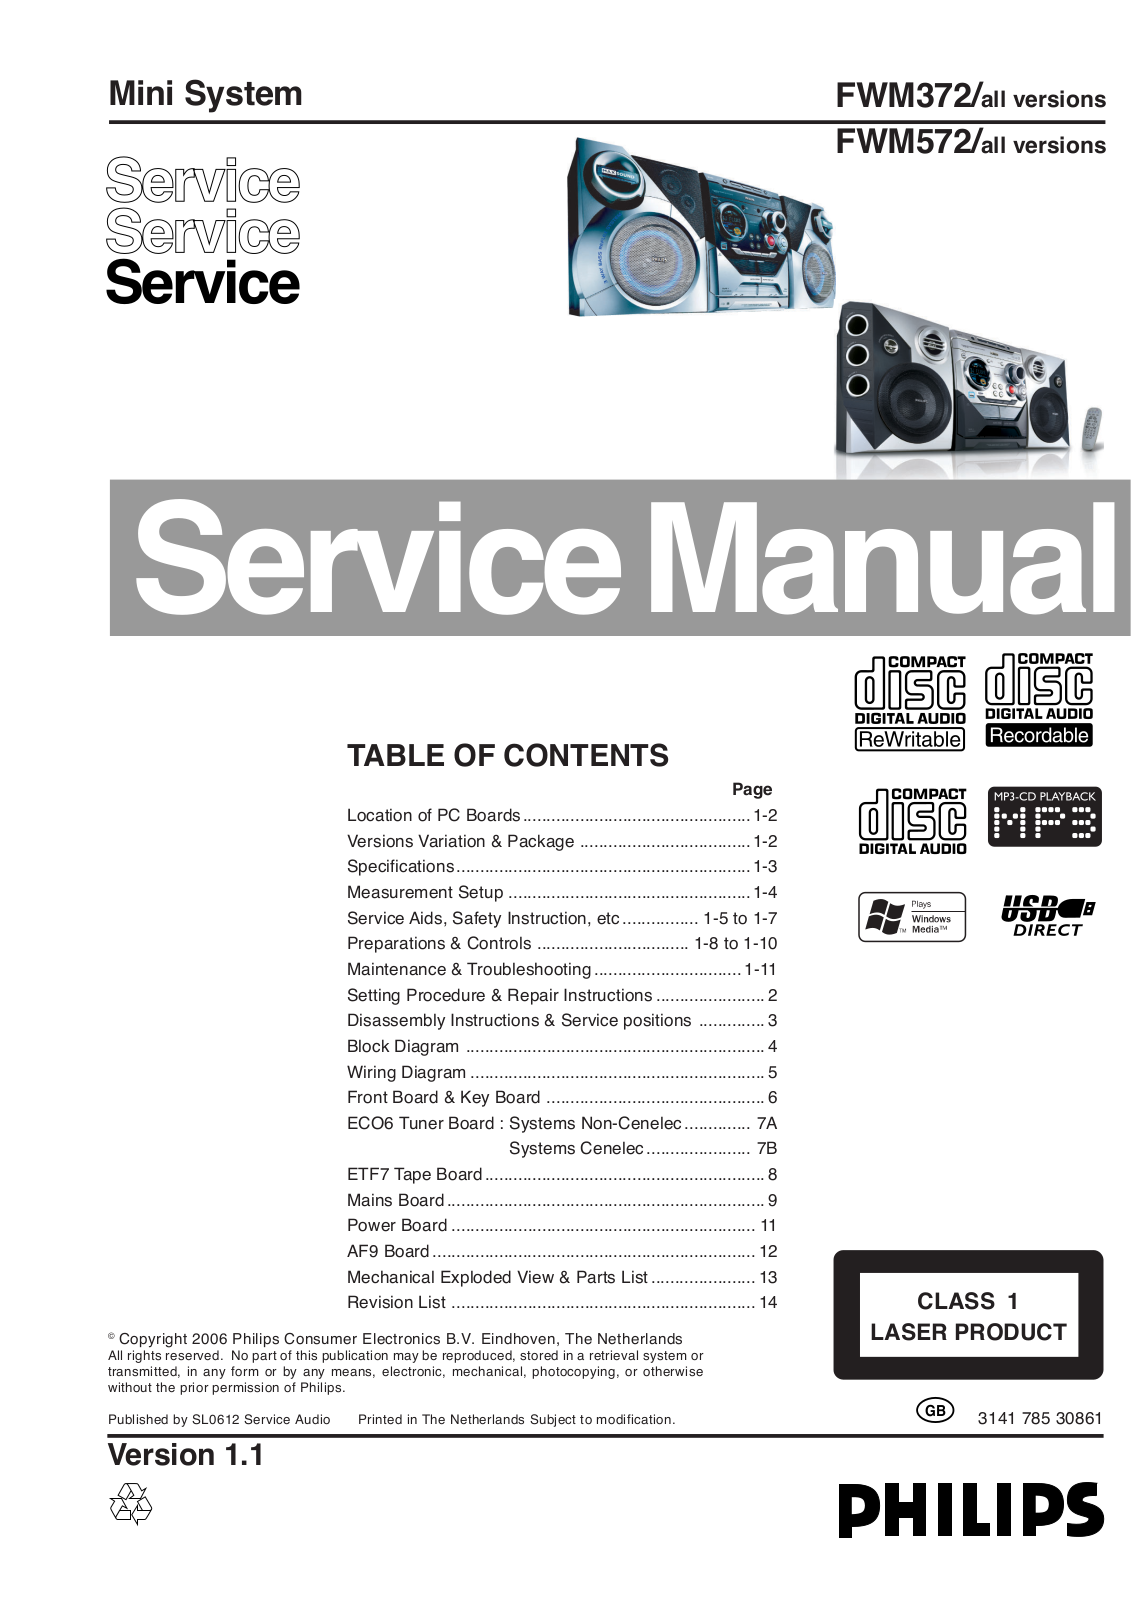 Philips FWM-572 Service Manual